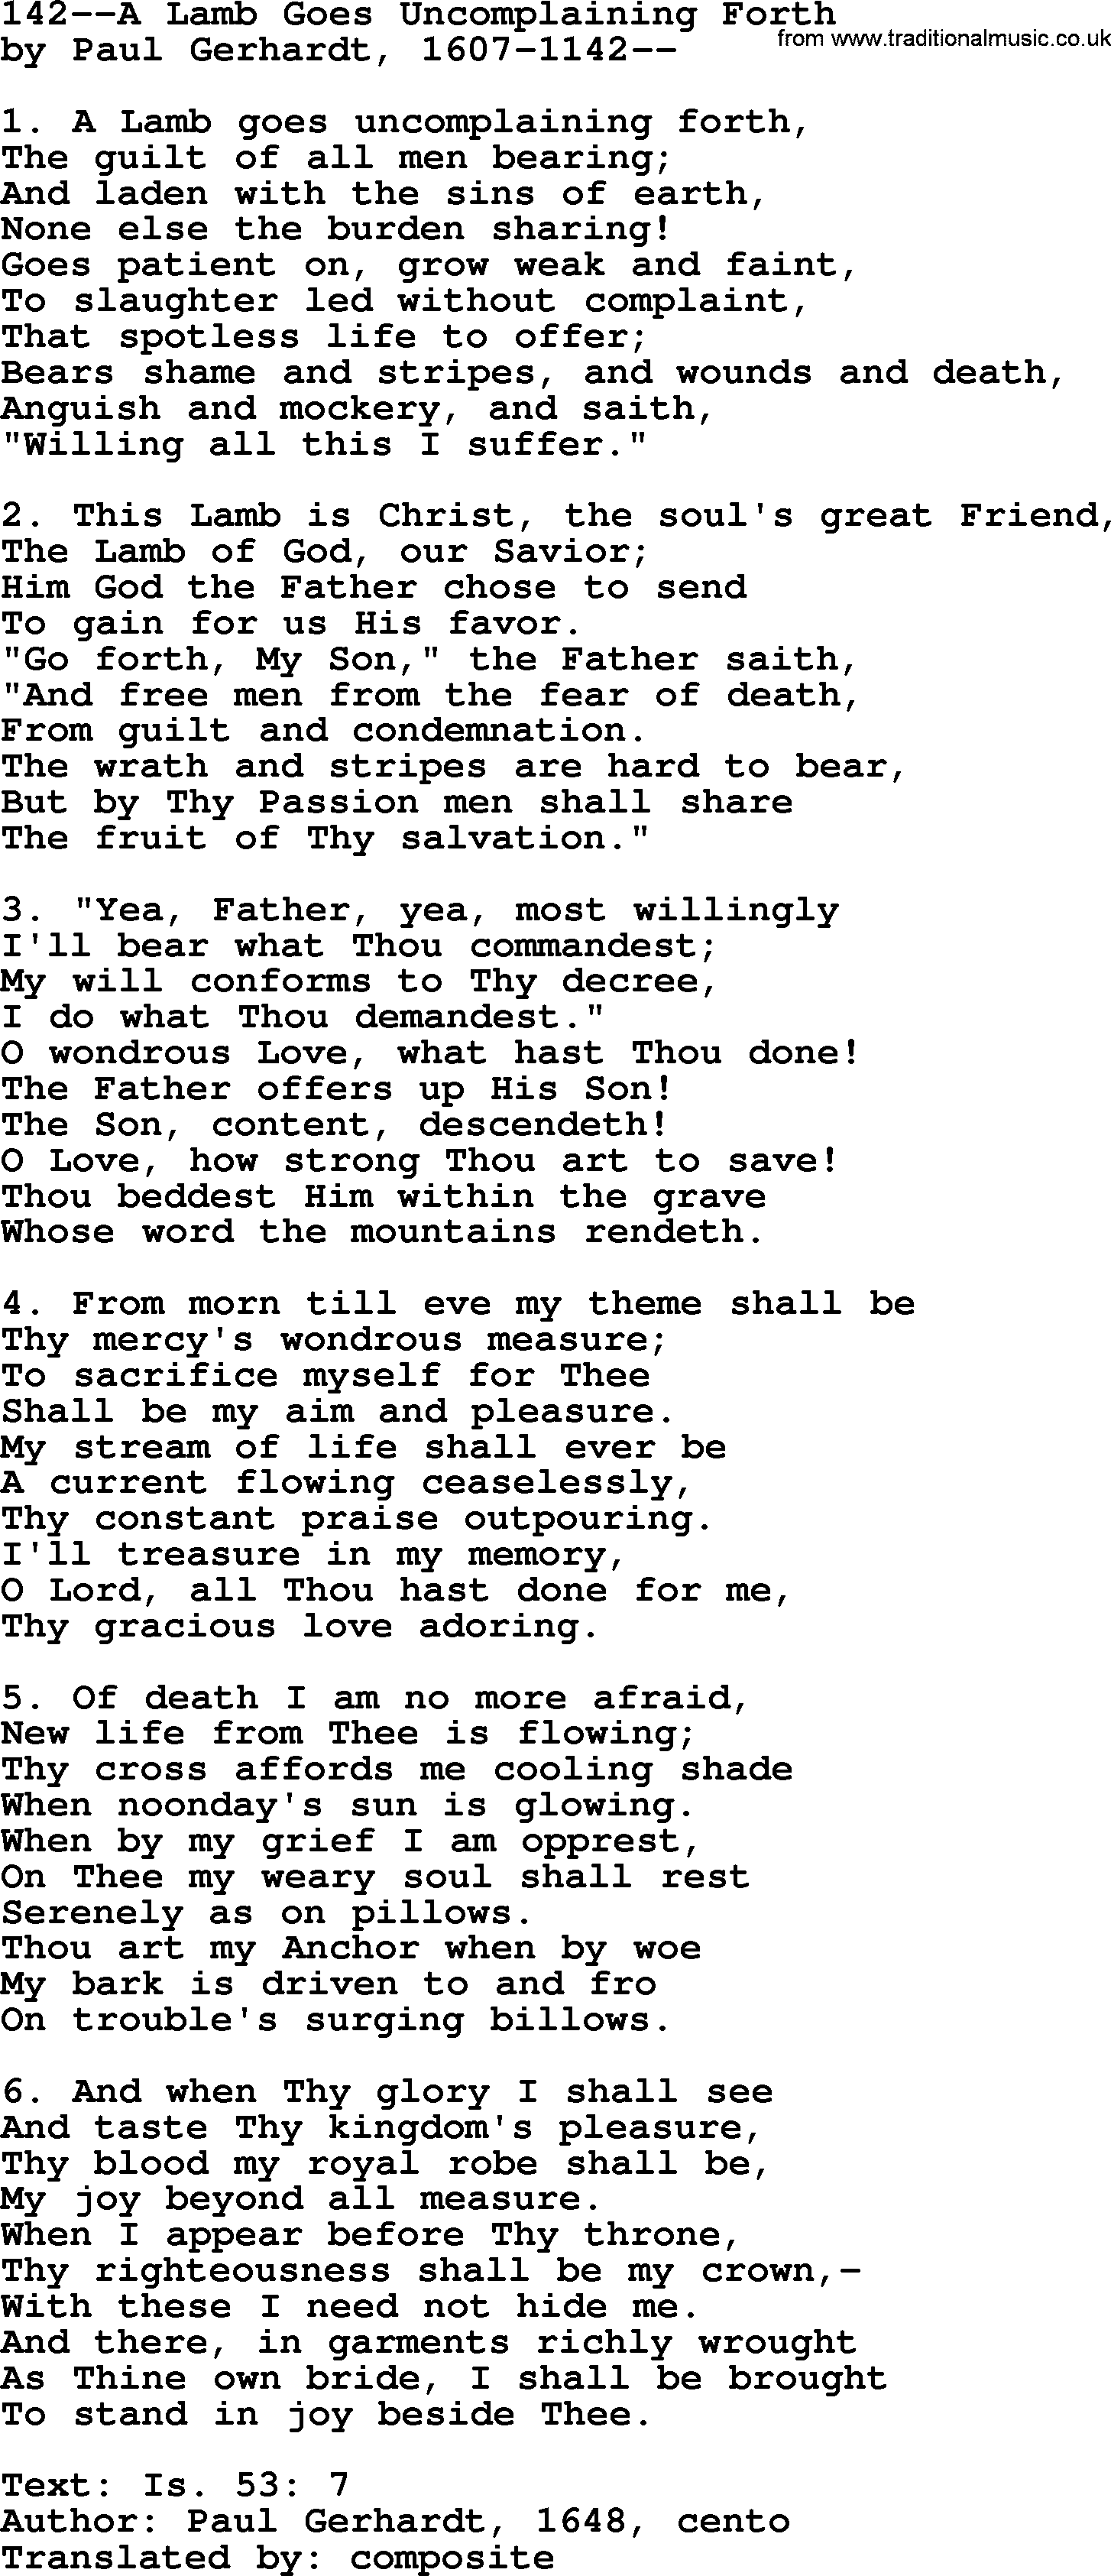 Lutheran Hymn: 142--A Lamb Goes Uncomplaining Forth.txt lyrics with PDF